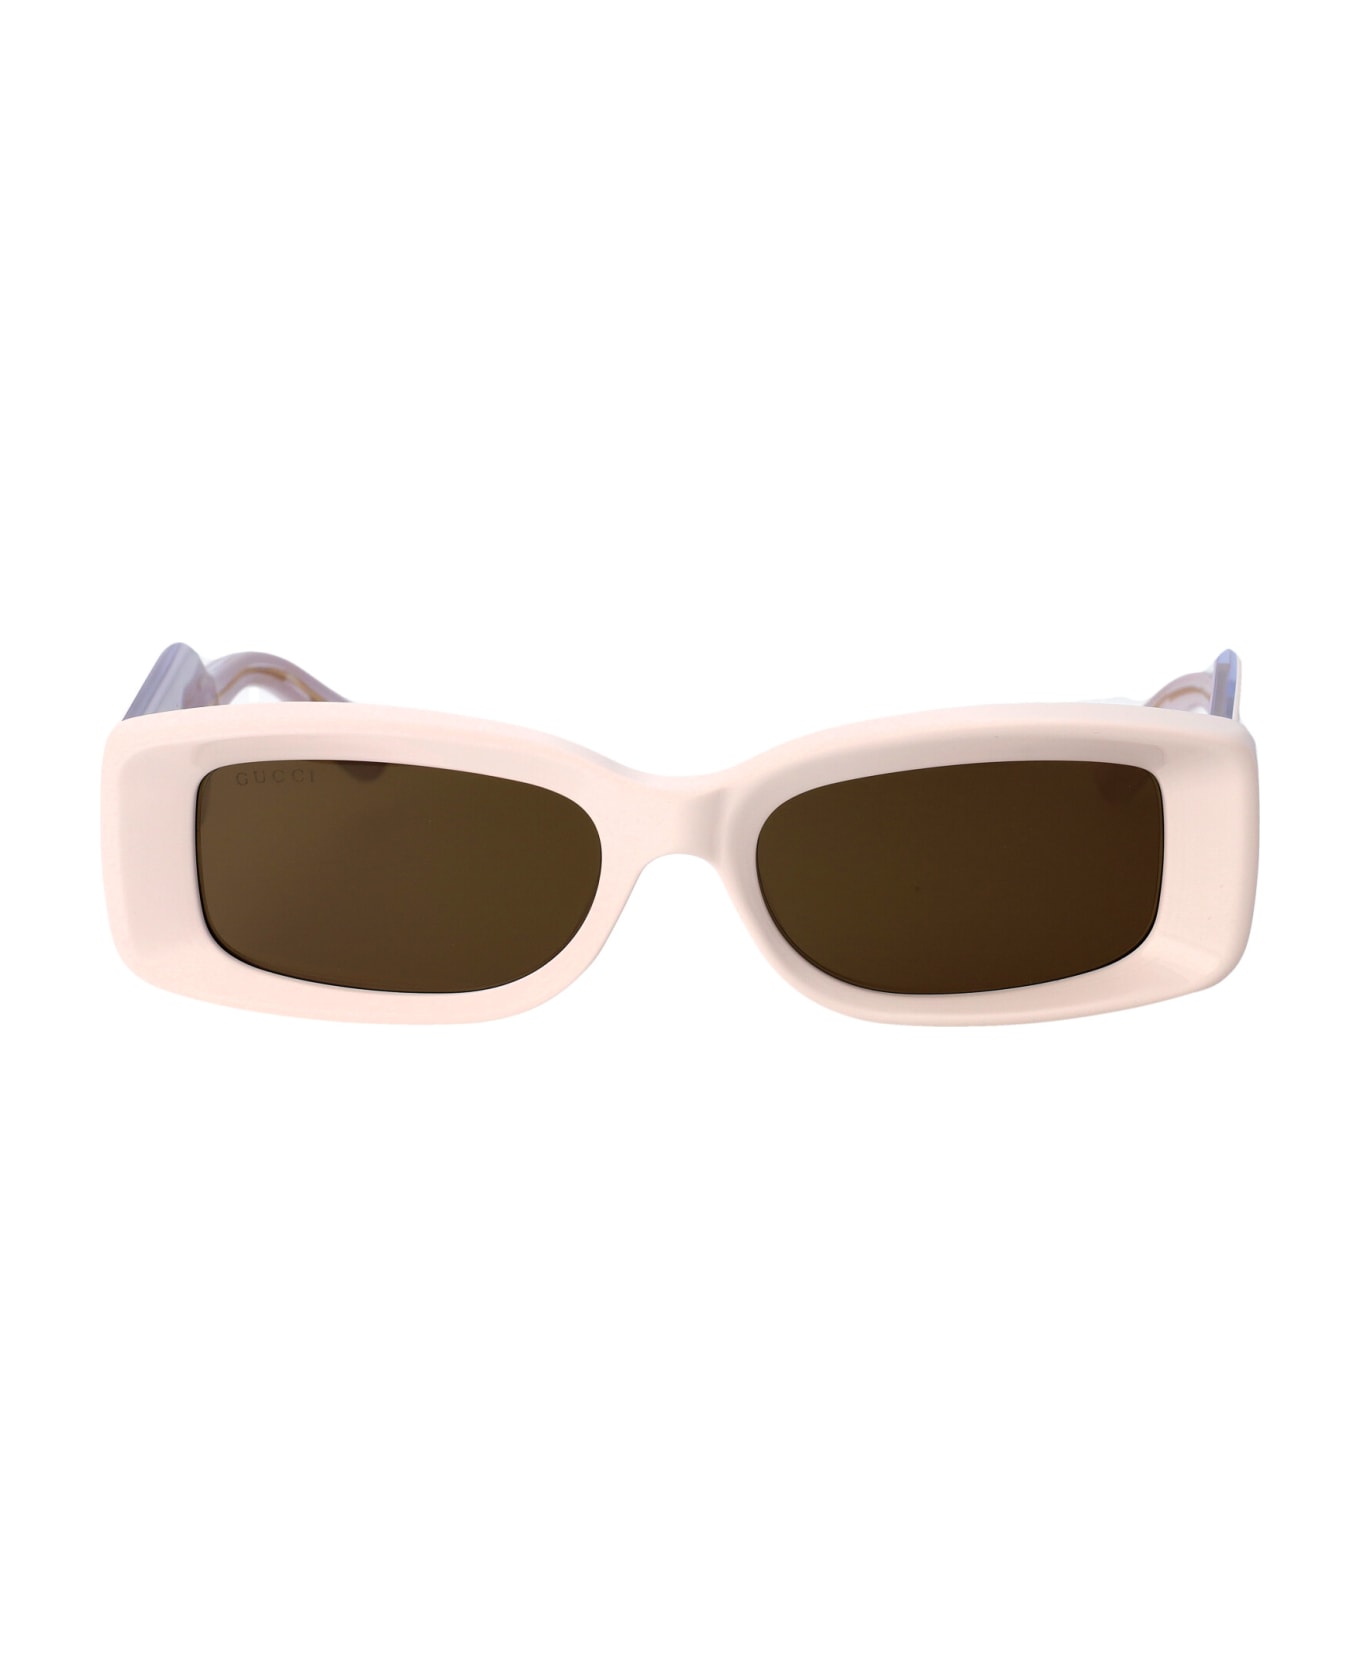 Gucci Eyewear Gg1528s Sunglasses - 003 IVORY IVORY BROWN